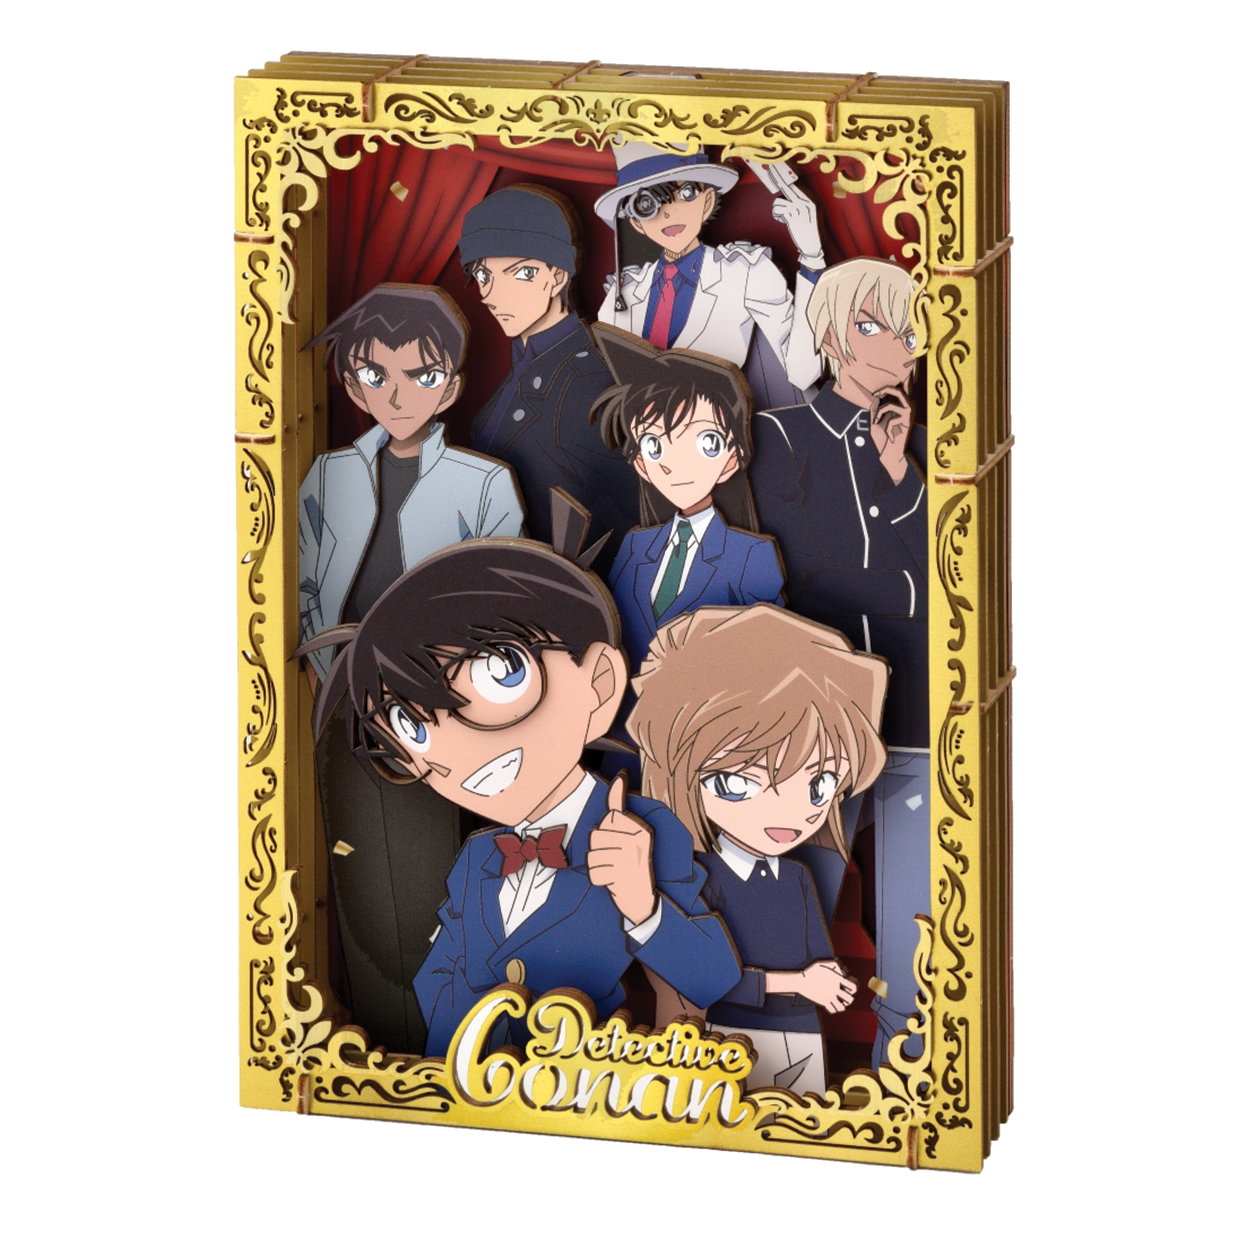 Paper Theater Premium | Detective Conan